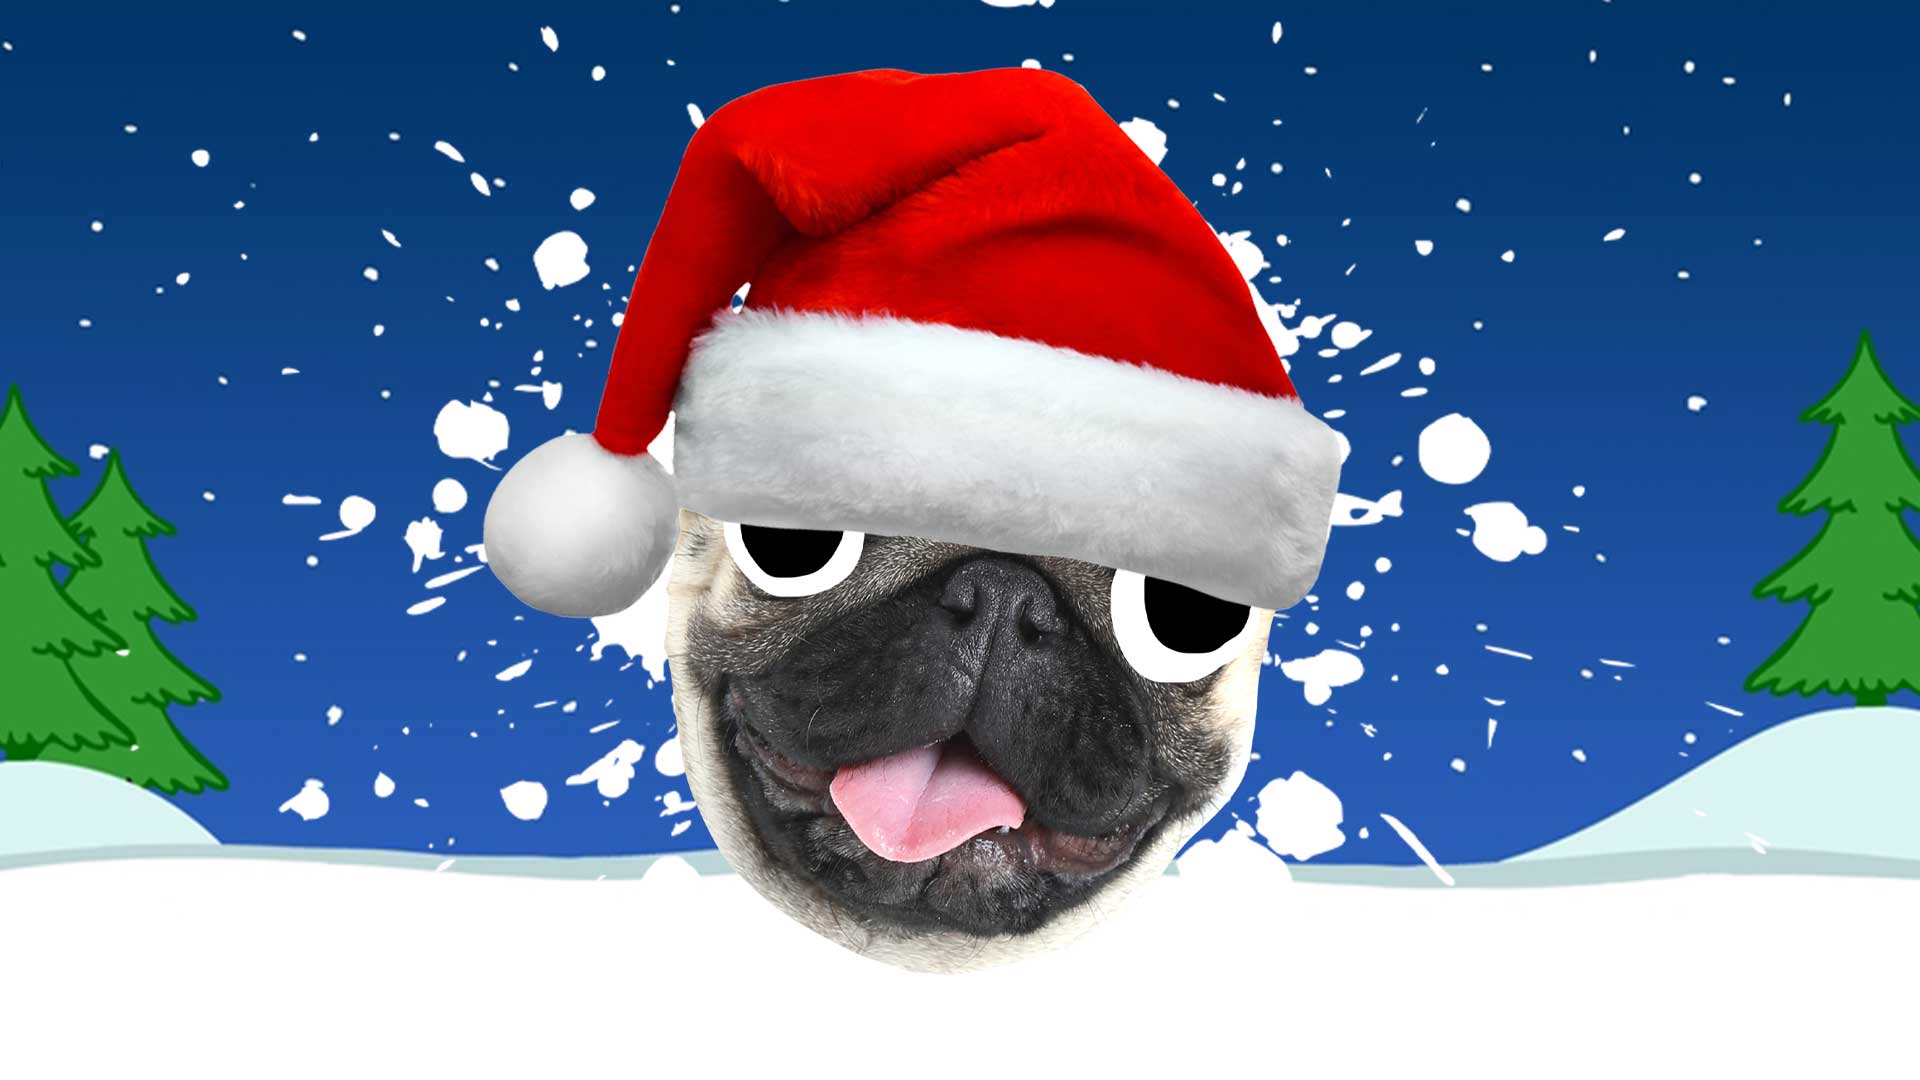 A pug wearing a Santa hat